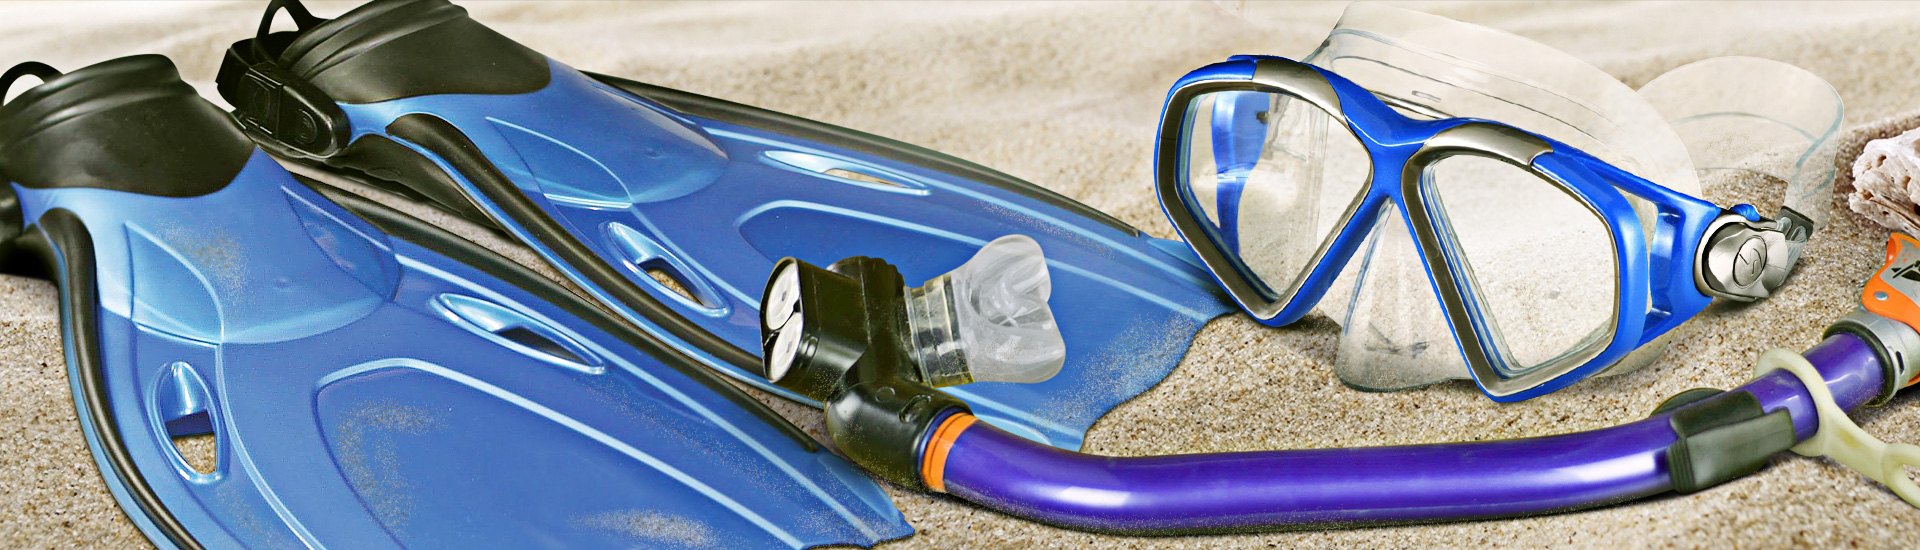 Aqua Leisure Dive & Snorkel Gear